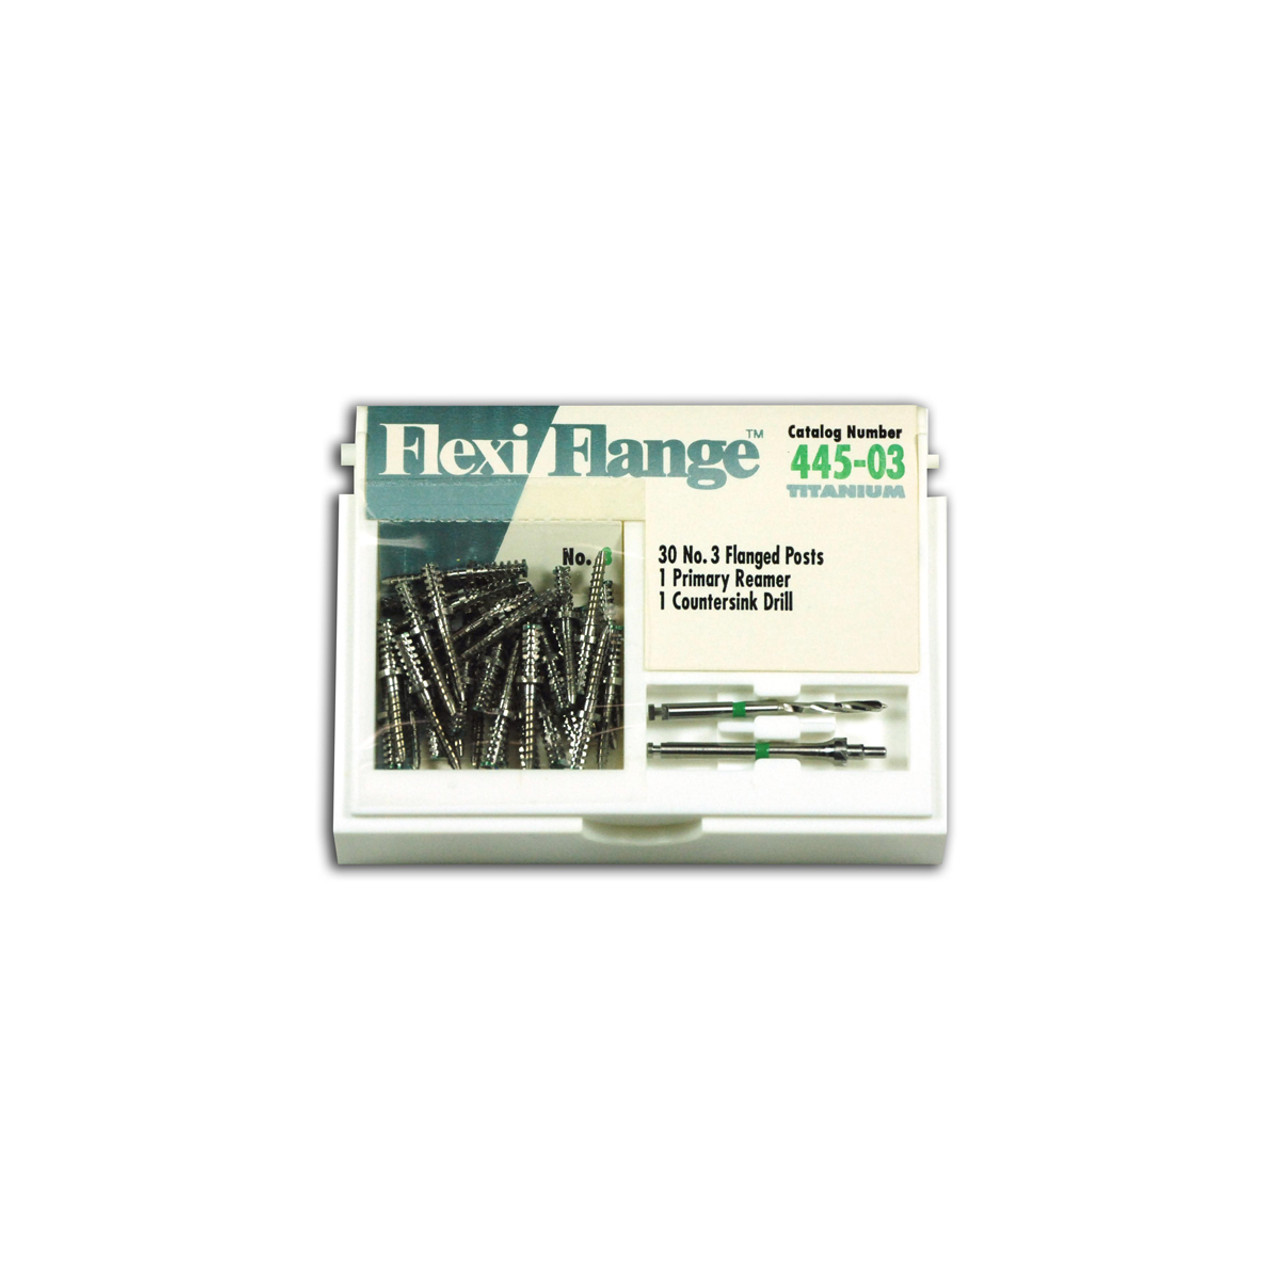 Essential Dental - Flexi-Flange Titanium Economy Refills-Green/Size 3